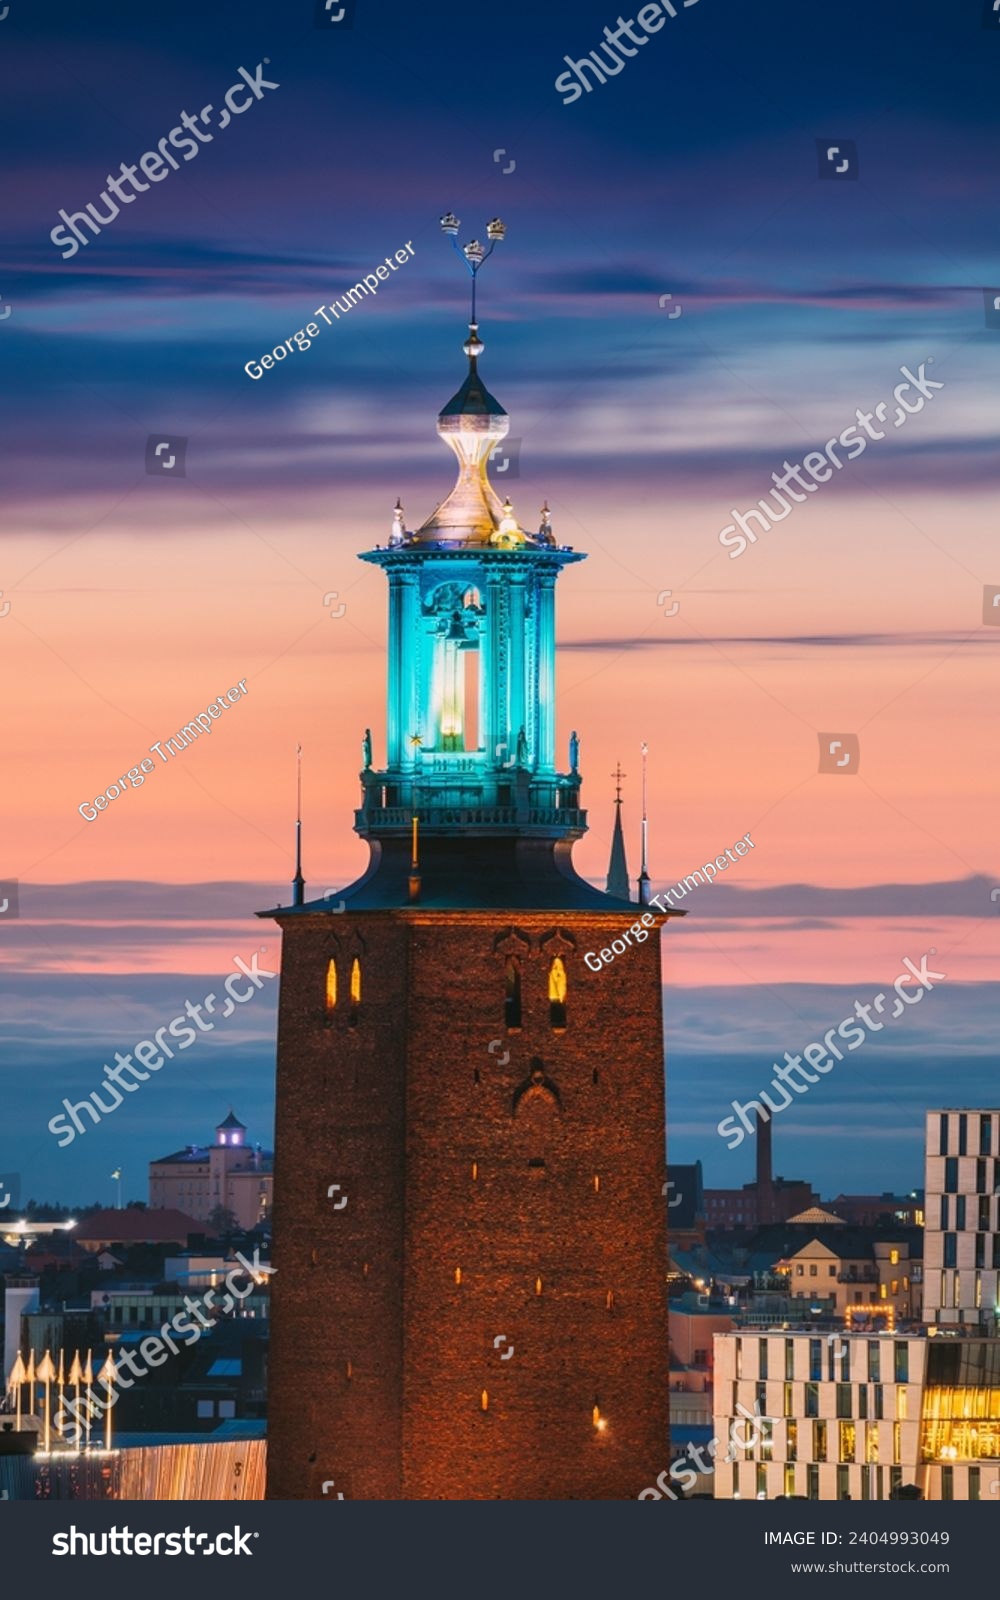 Stockholm, Sweden. Close View Of Famous Tower Of Stockholm City Hall. Popular Destination Scenic In Sunset Twilight Dusk Lights. Evening Lighting. #2404993049